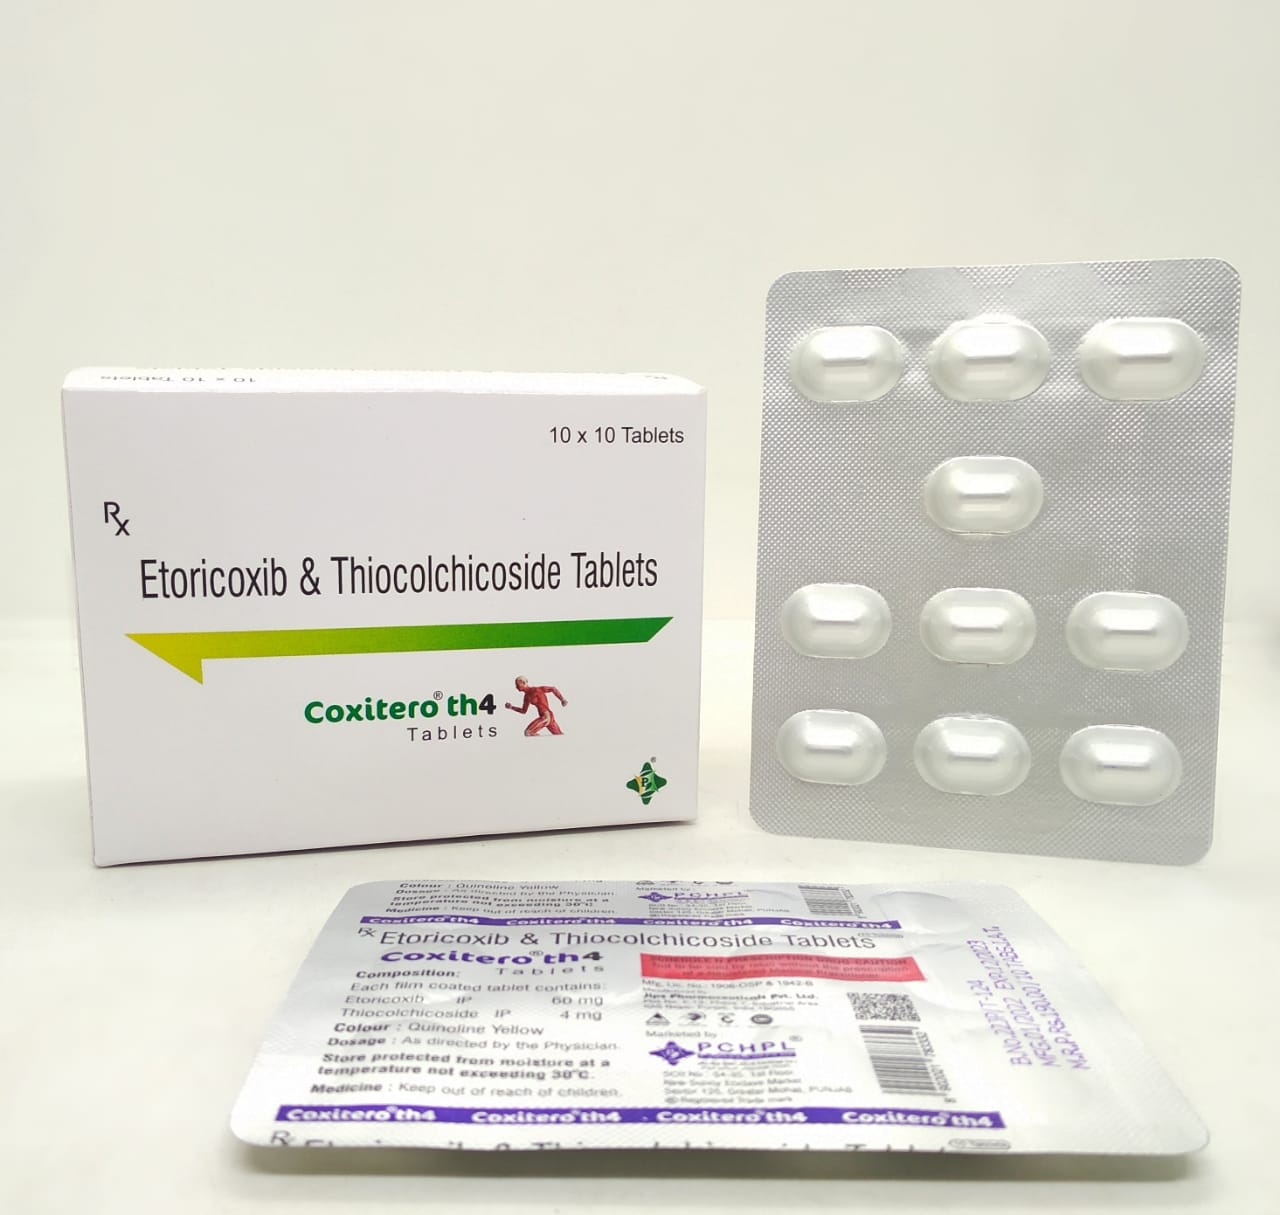 Etoricoxib & Thiocolchicoside Tablets